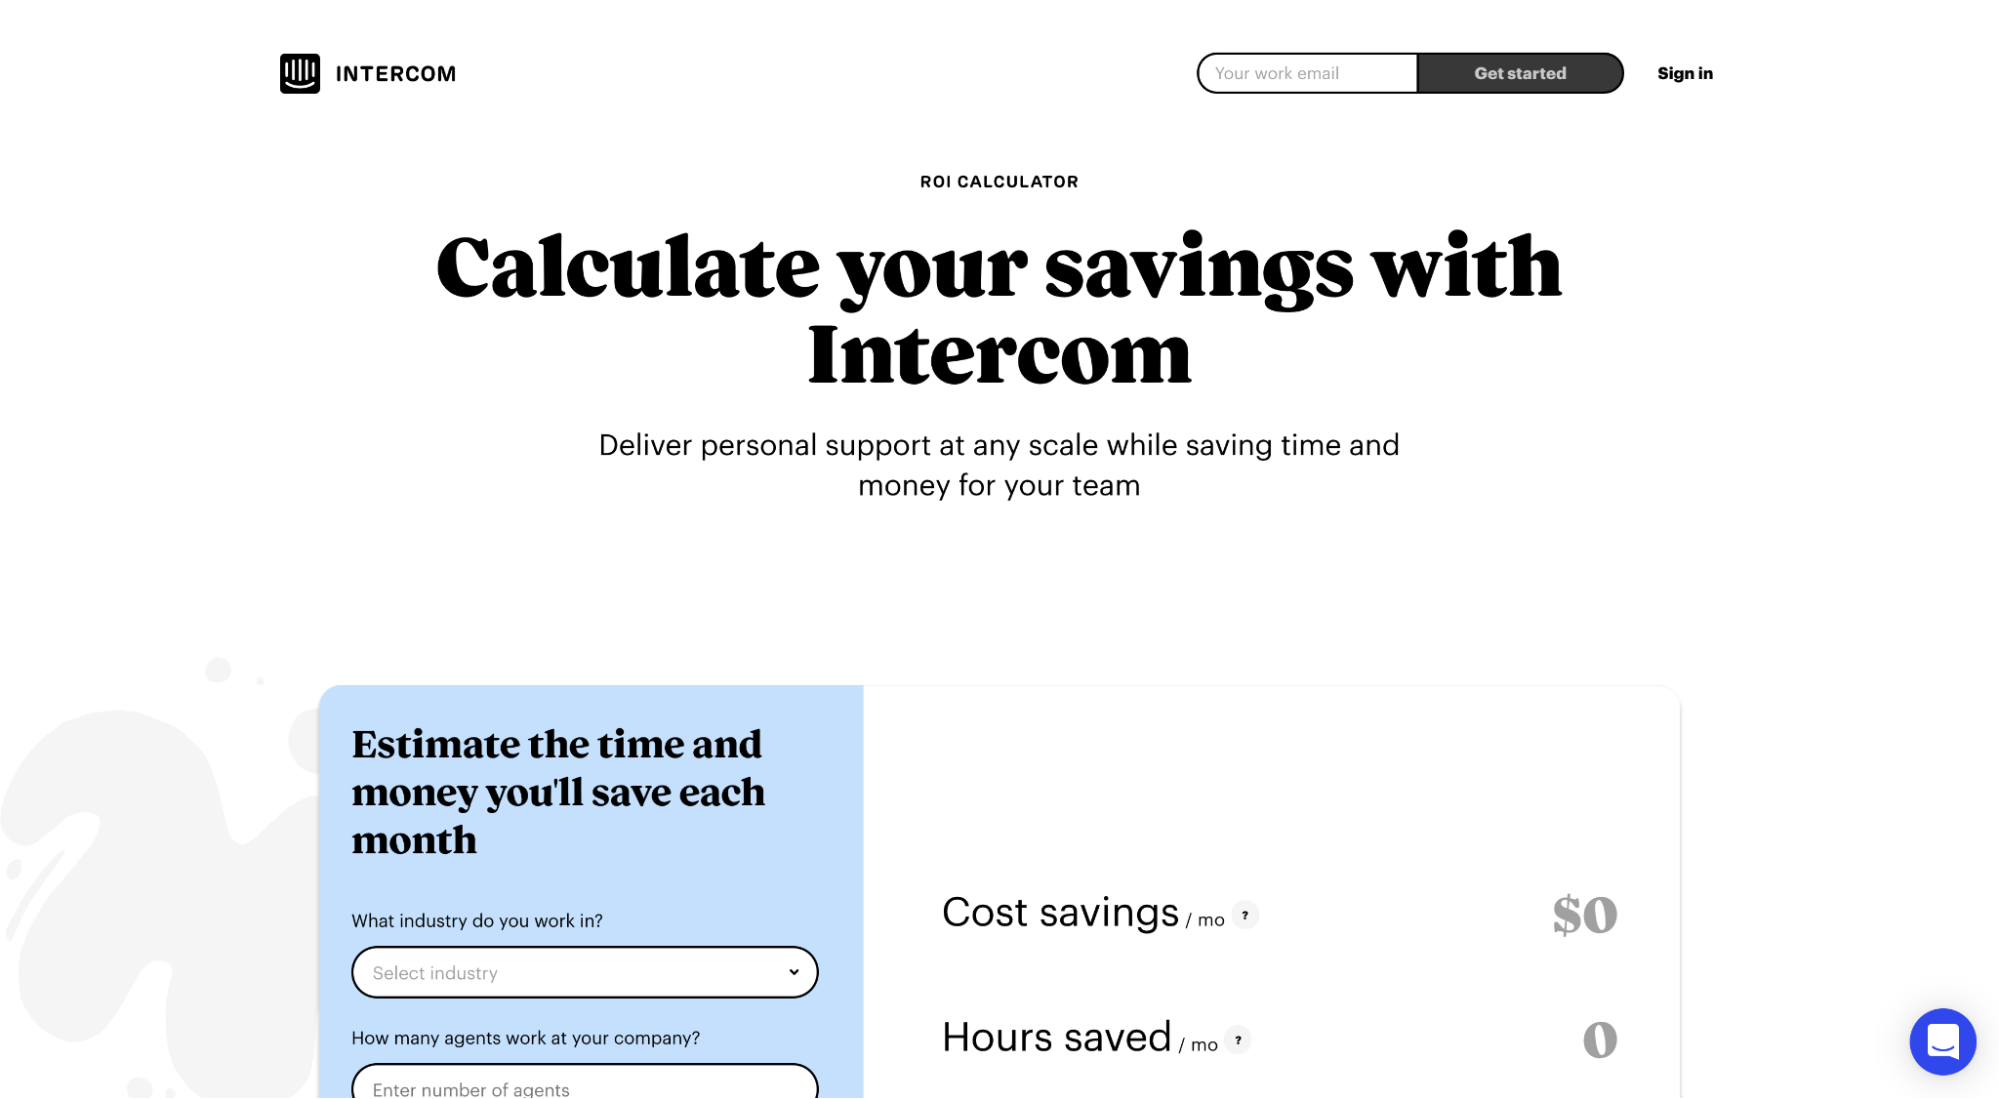 Intercom’s ROI calculator landing page